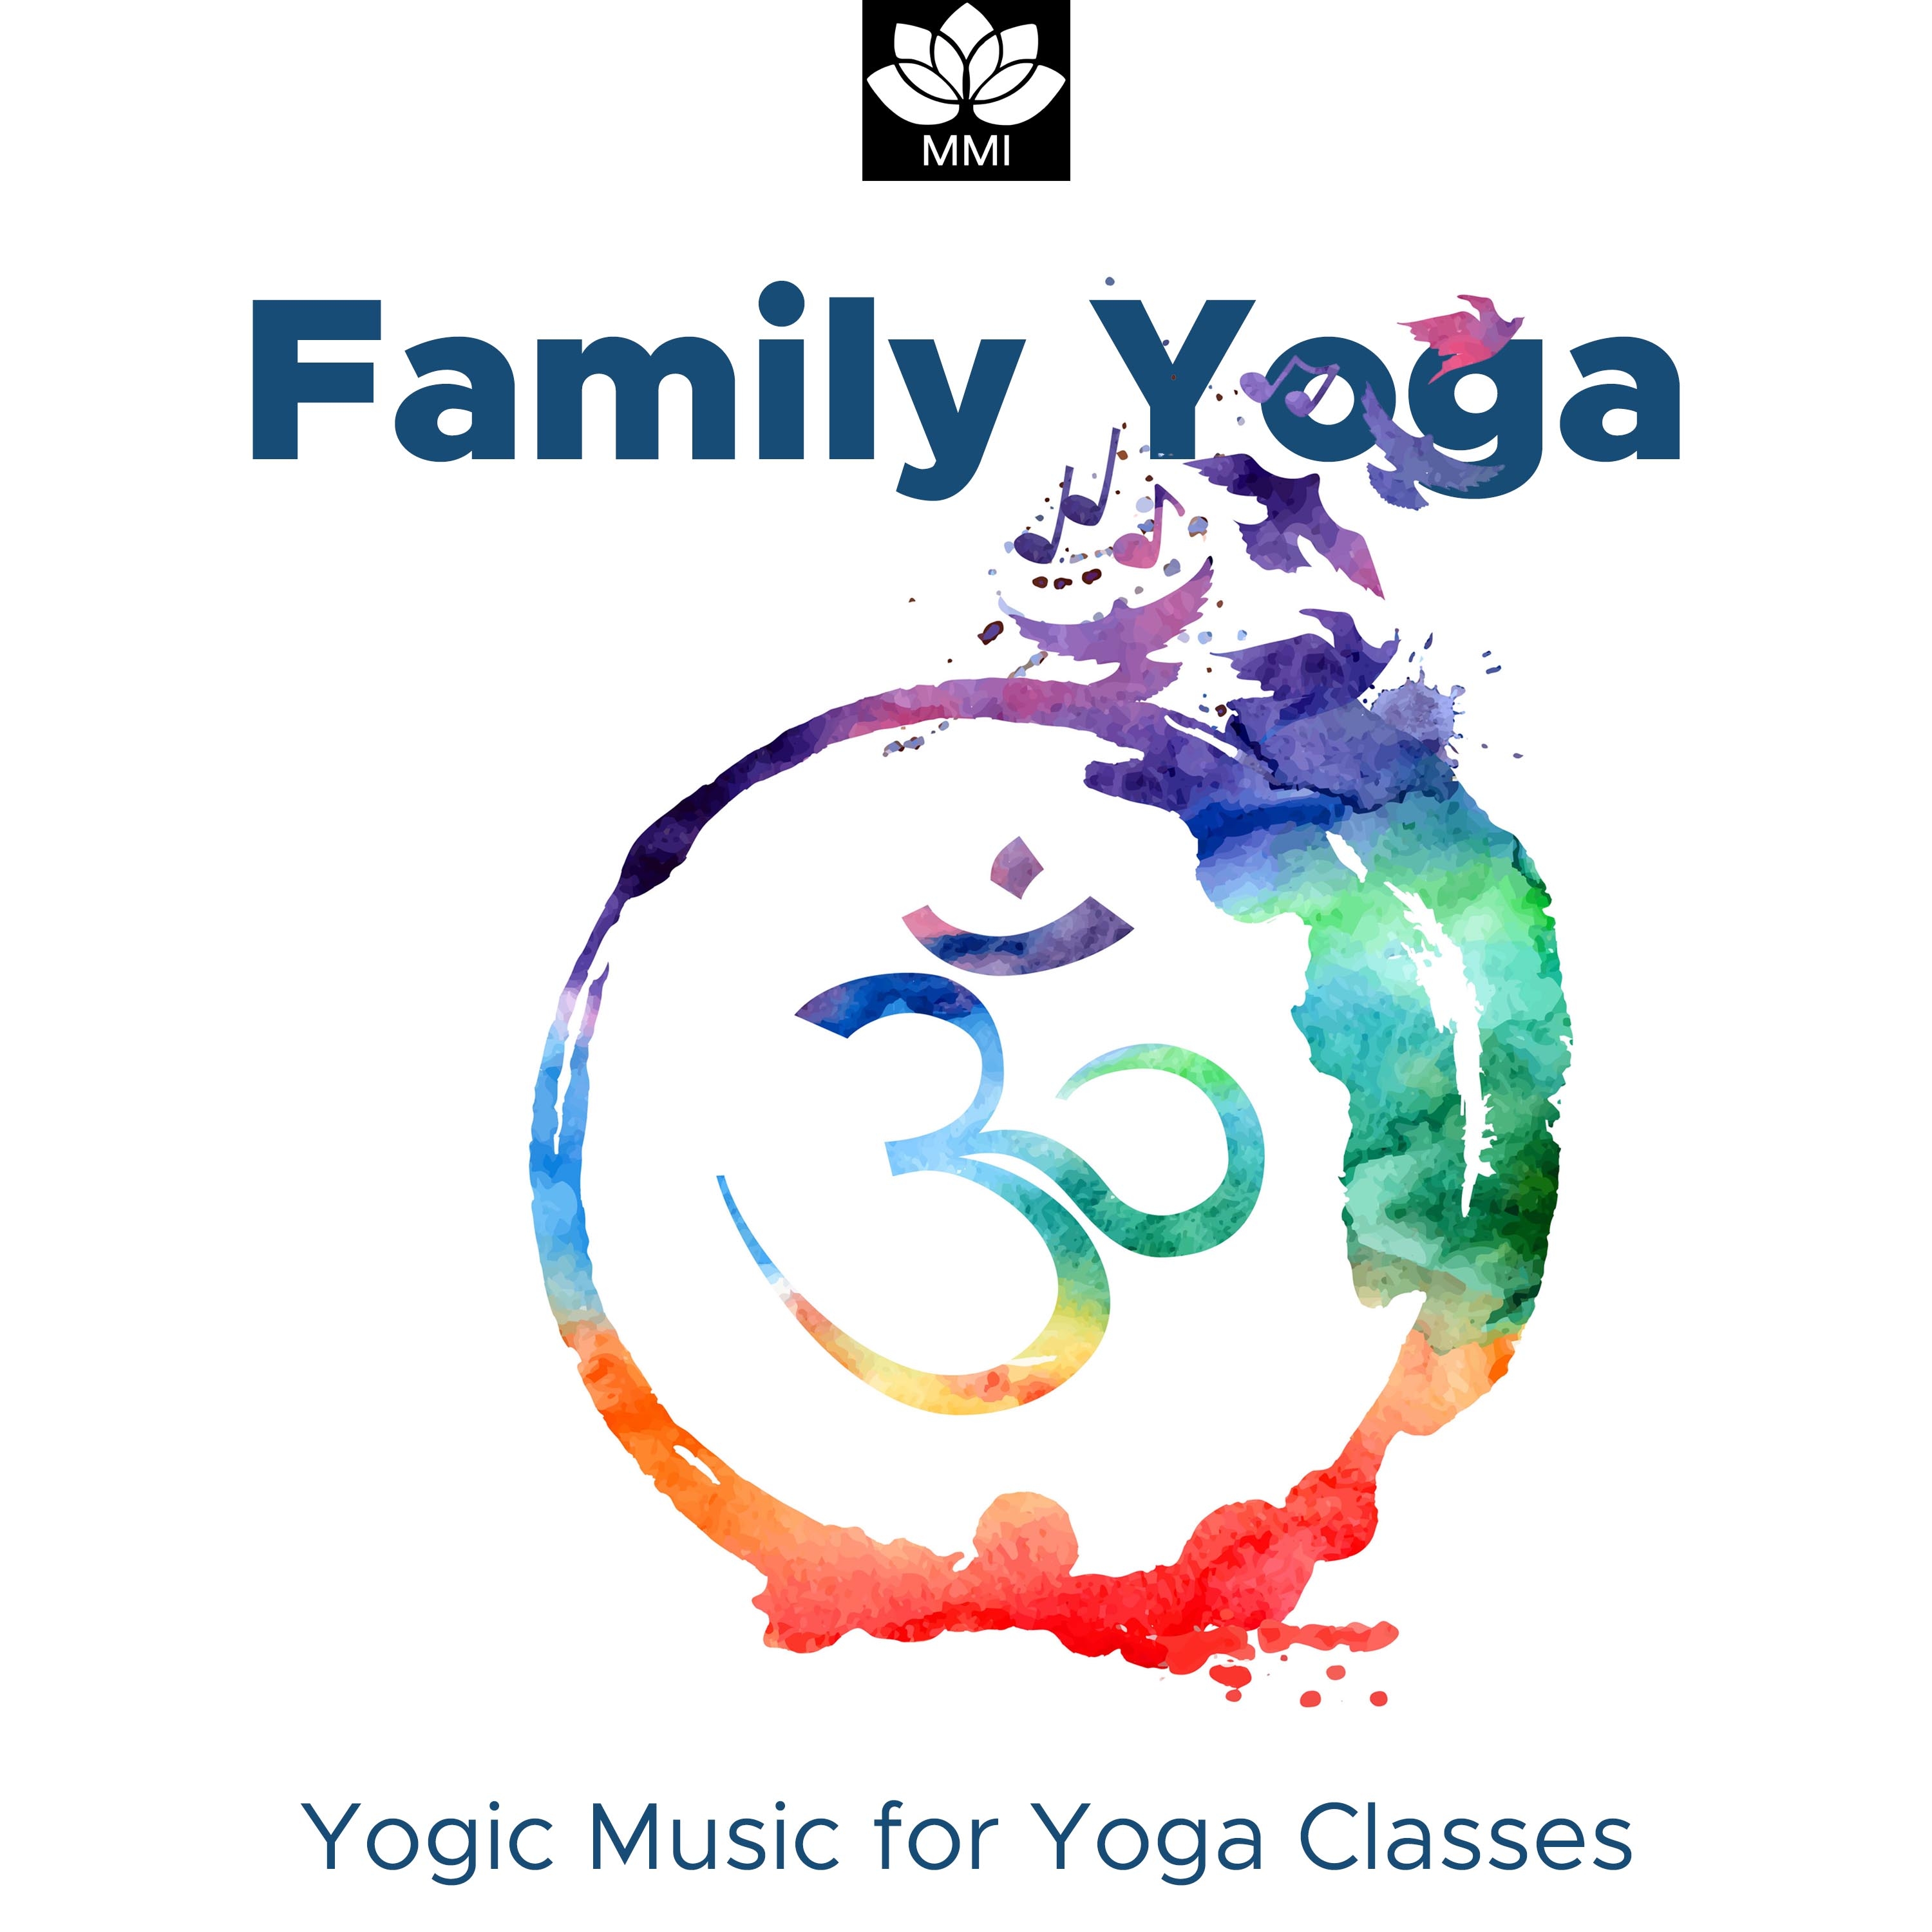 Family Yoga - Yogic Music for Yoga Classes, Yoga Practice at Home